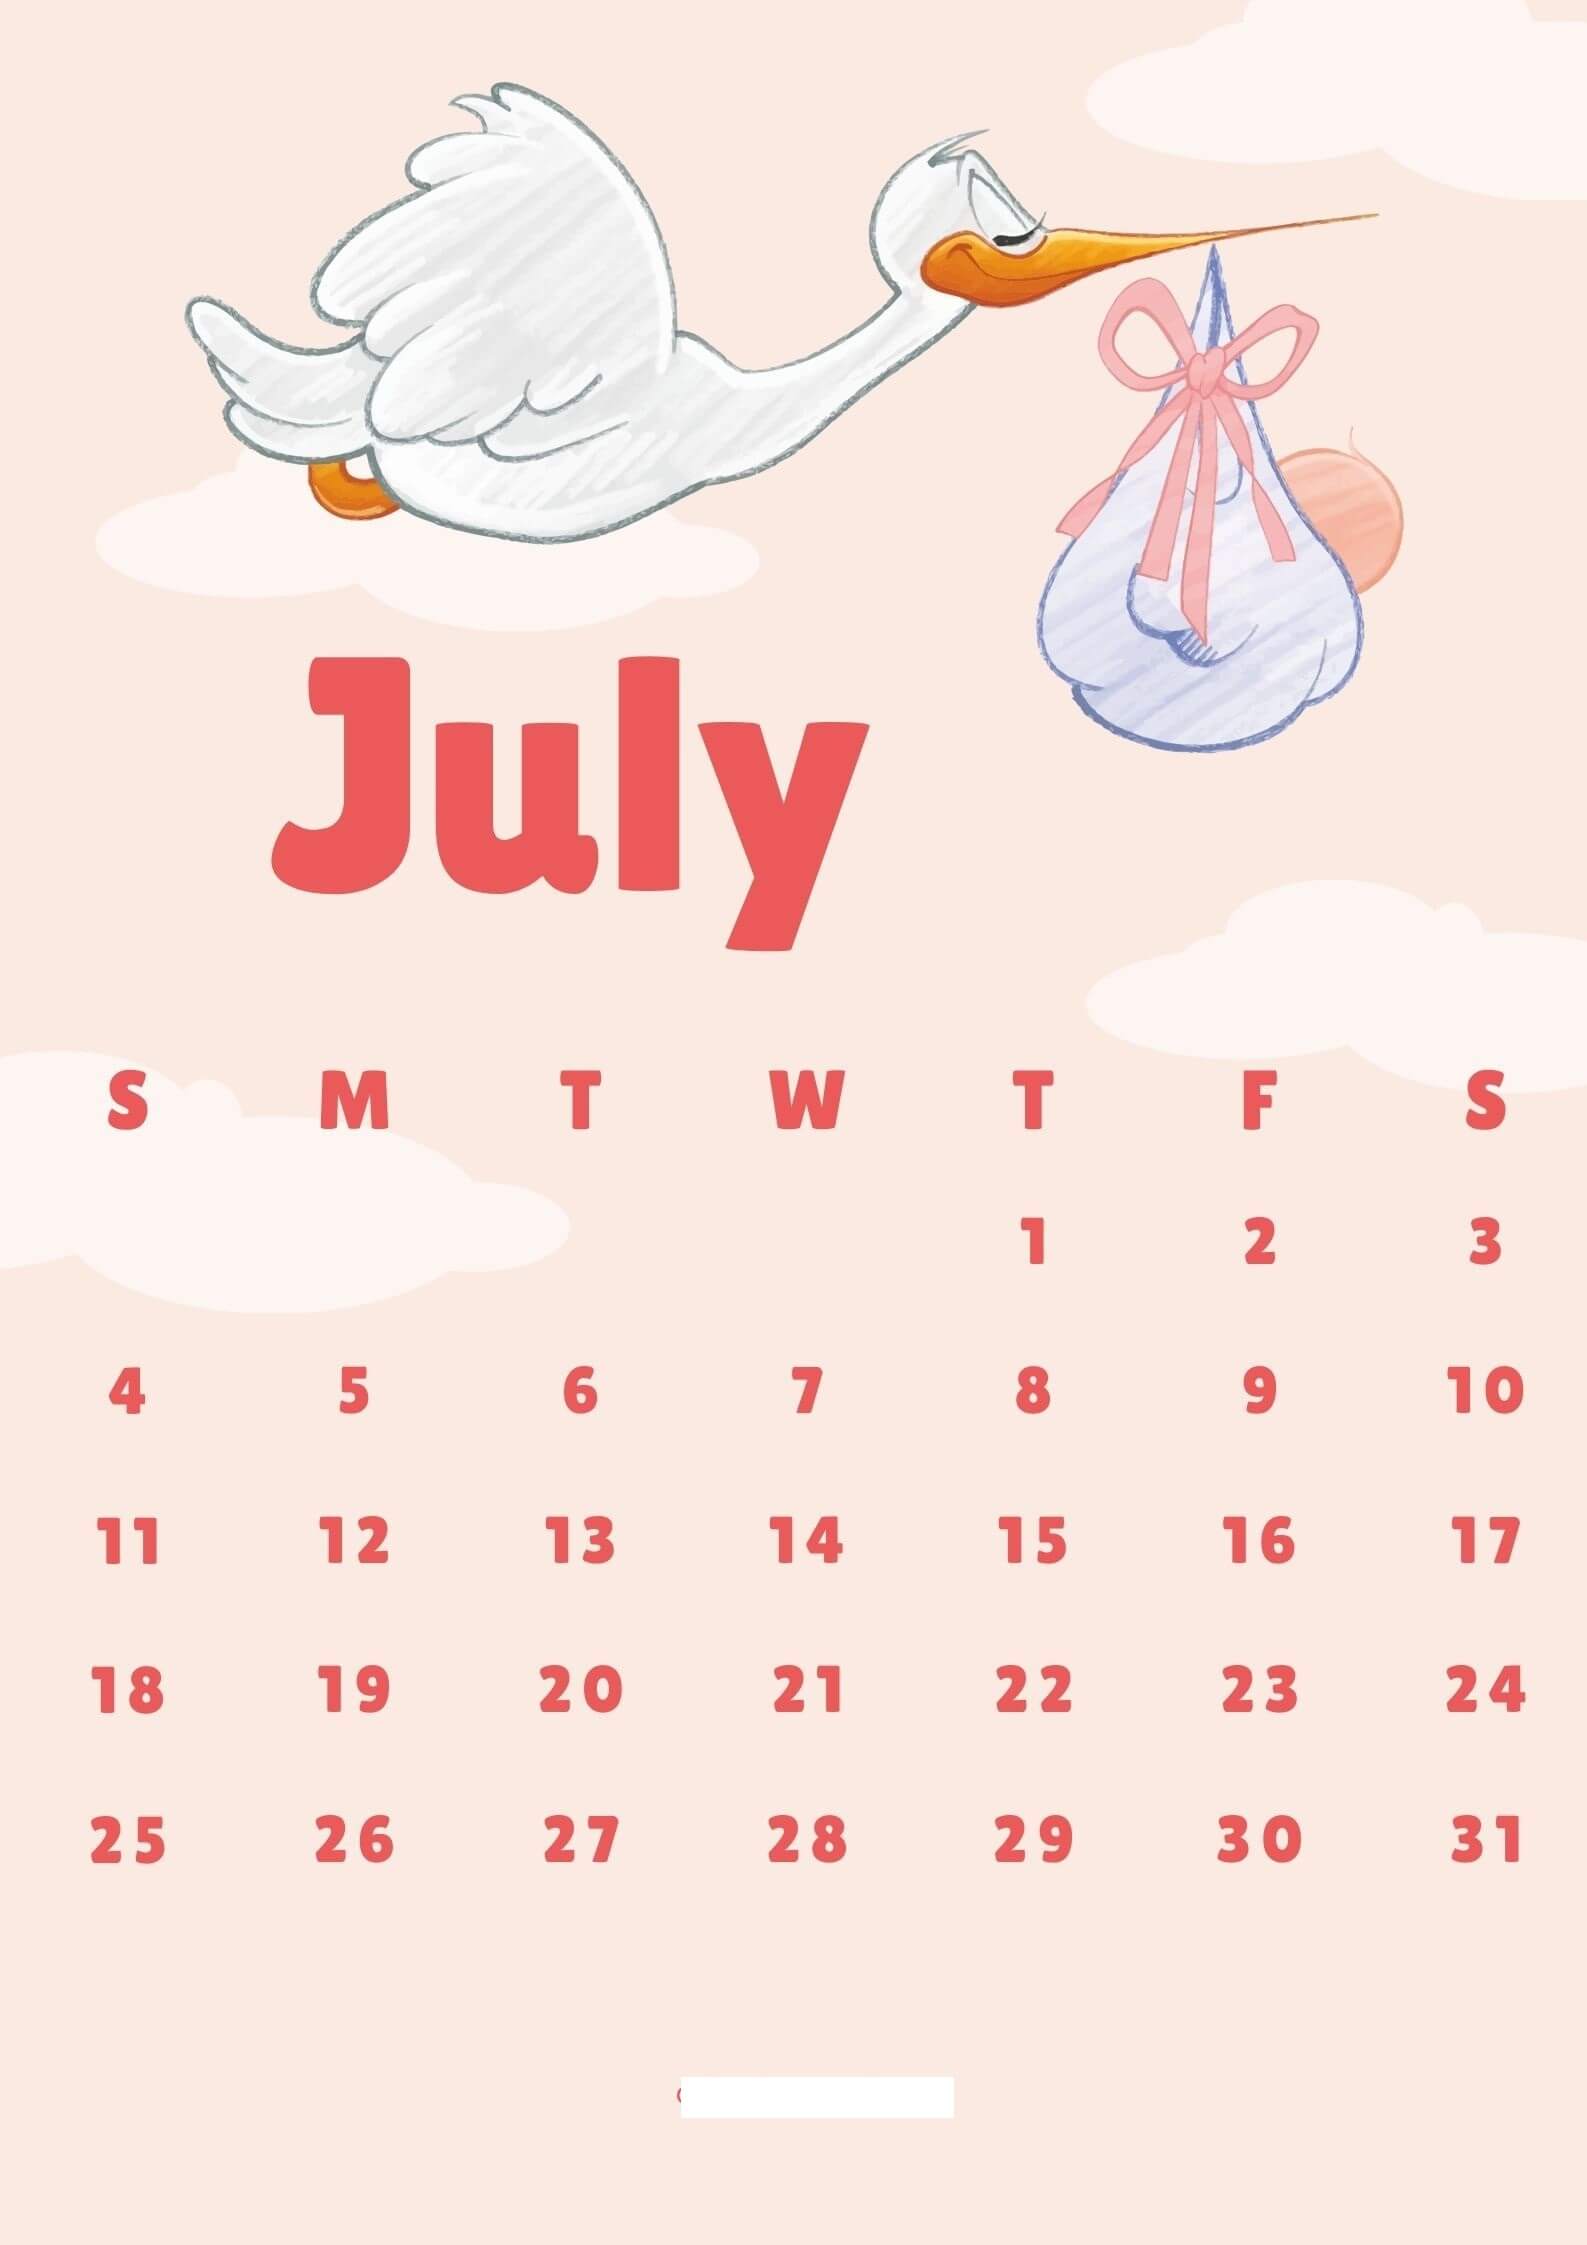 July 2021 Calendar Wallpaper for iPhone